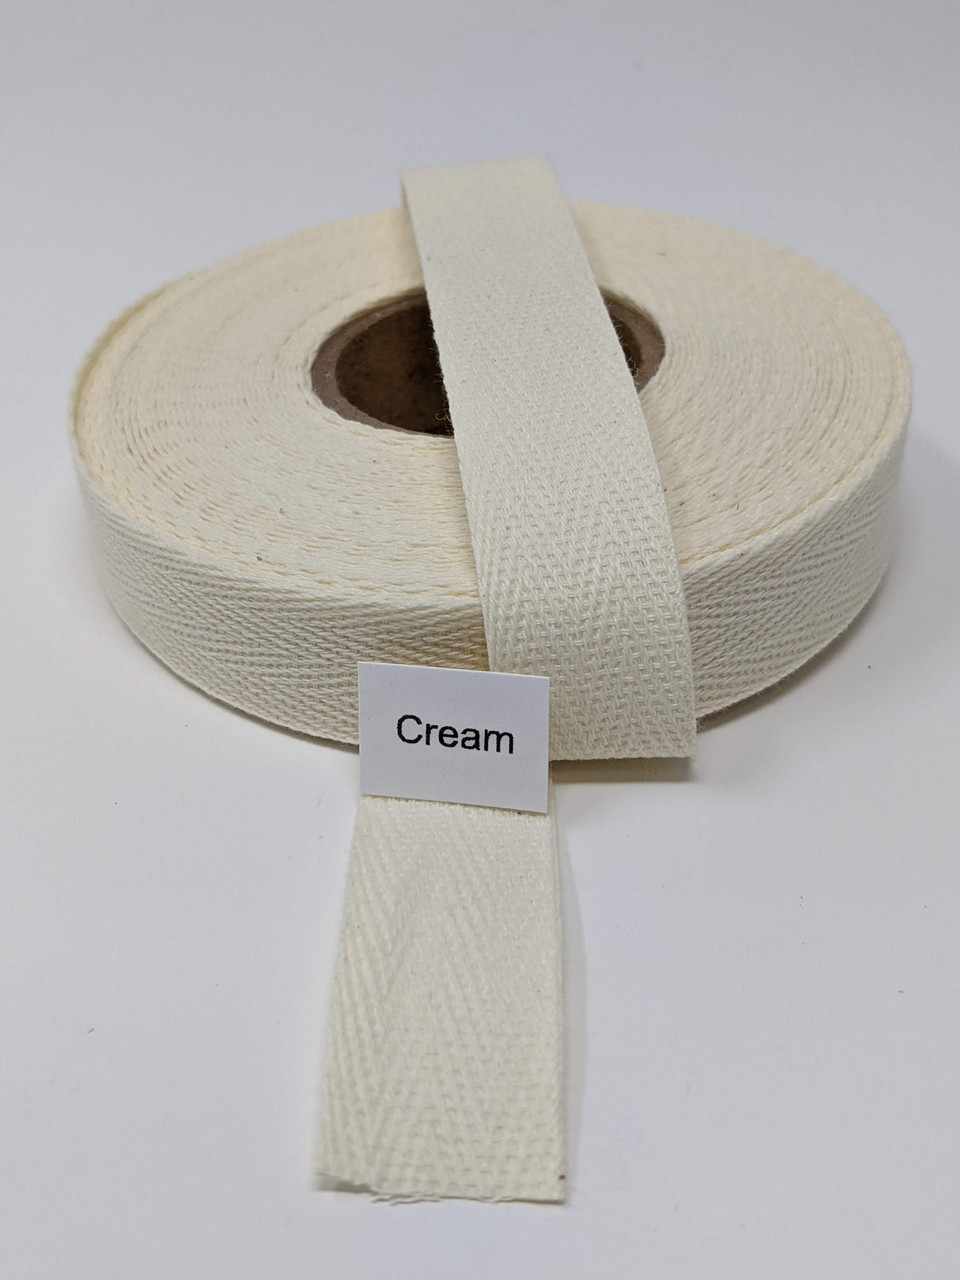 Cotton Twill Tape 3/4 Cream, 10 yard roll